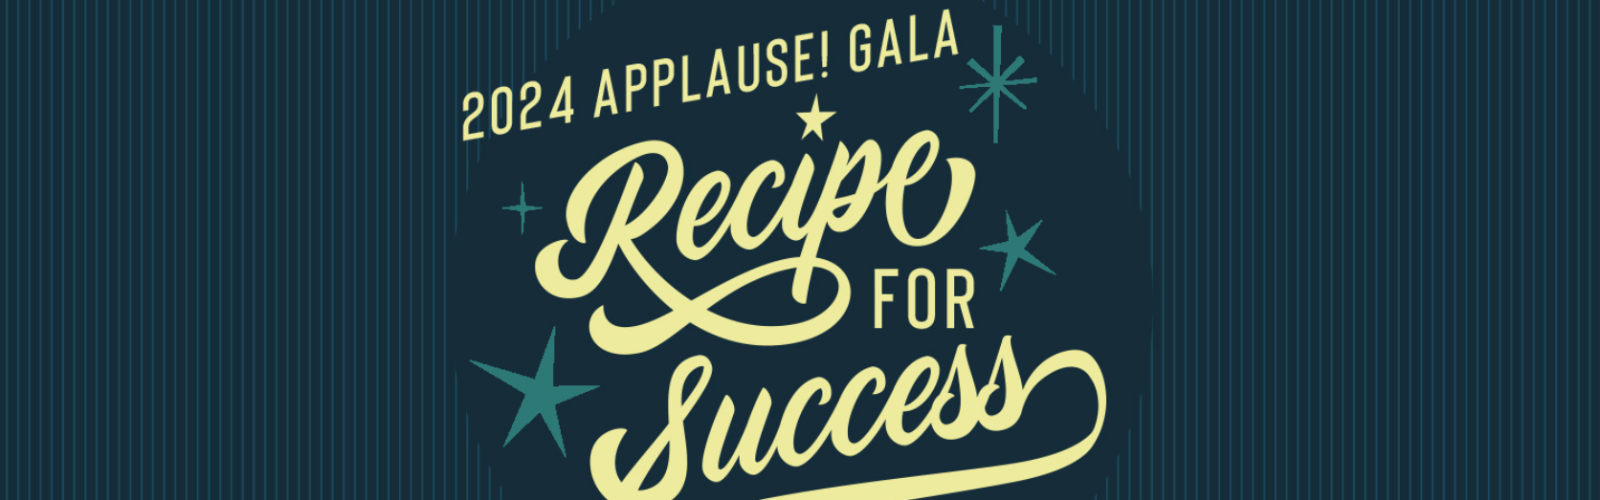 Applause Gala 2024 - Recipe for Success